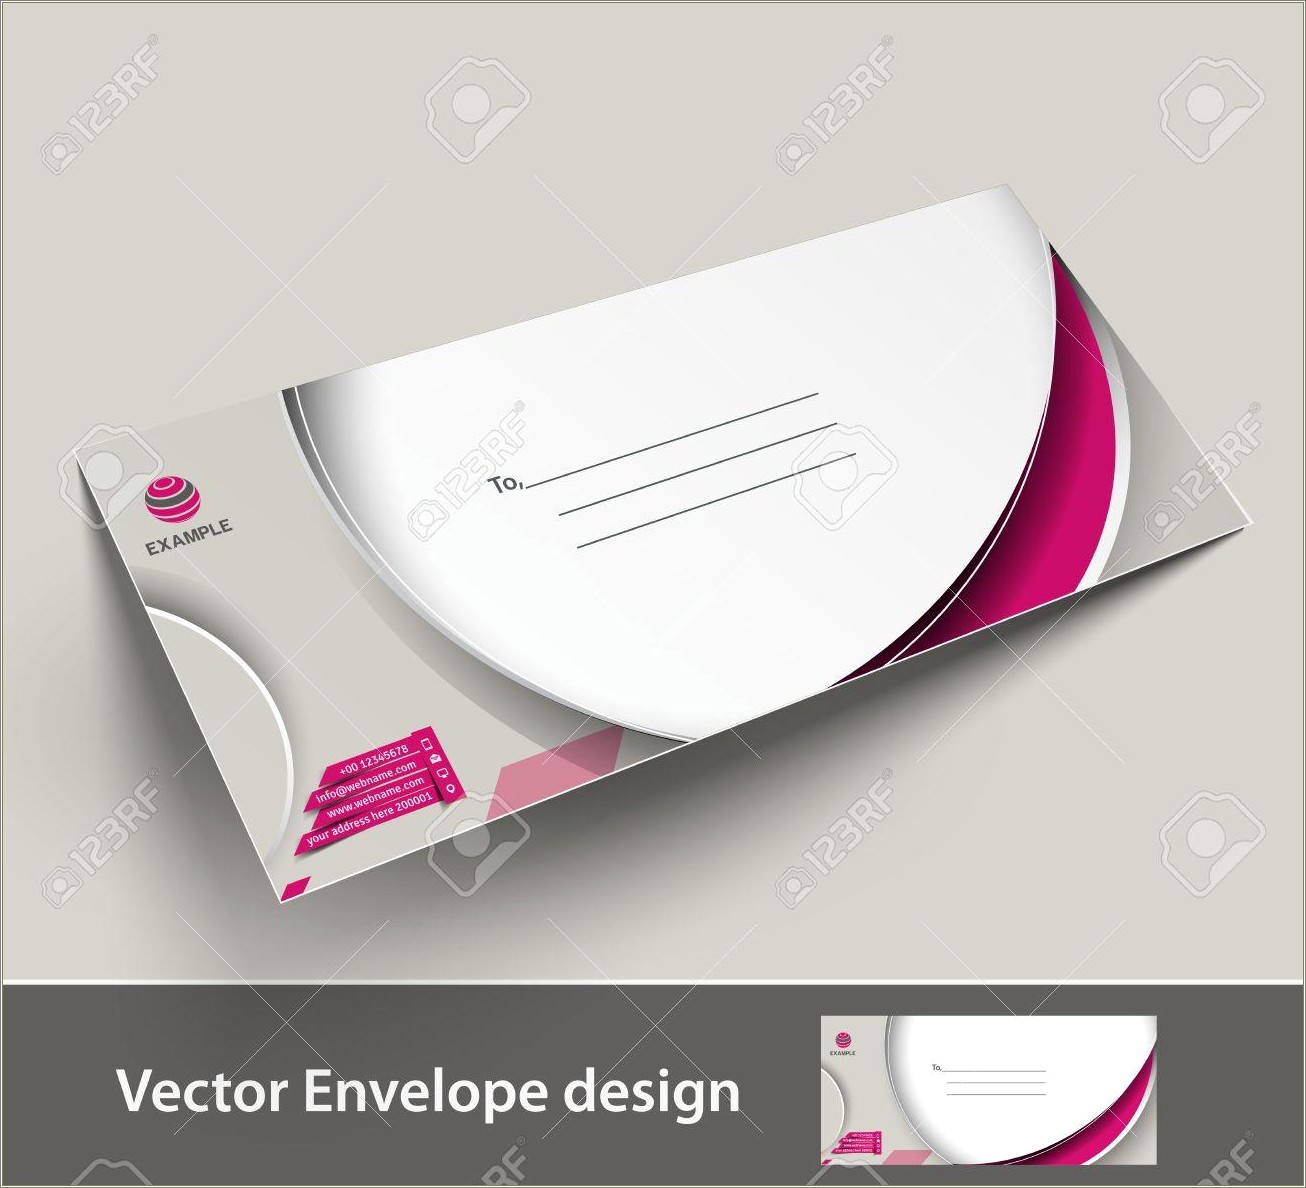 Envelope Design Template Vector Free Download